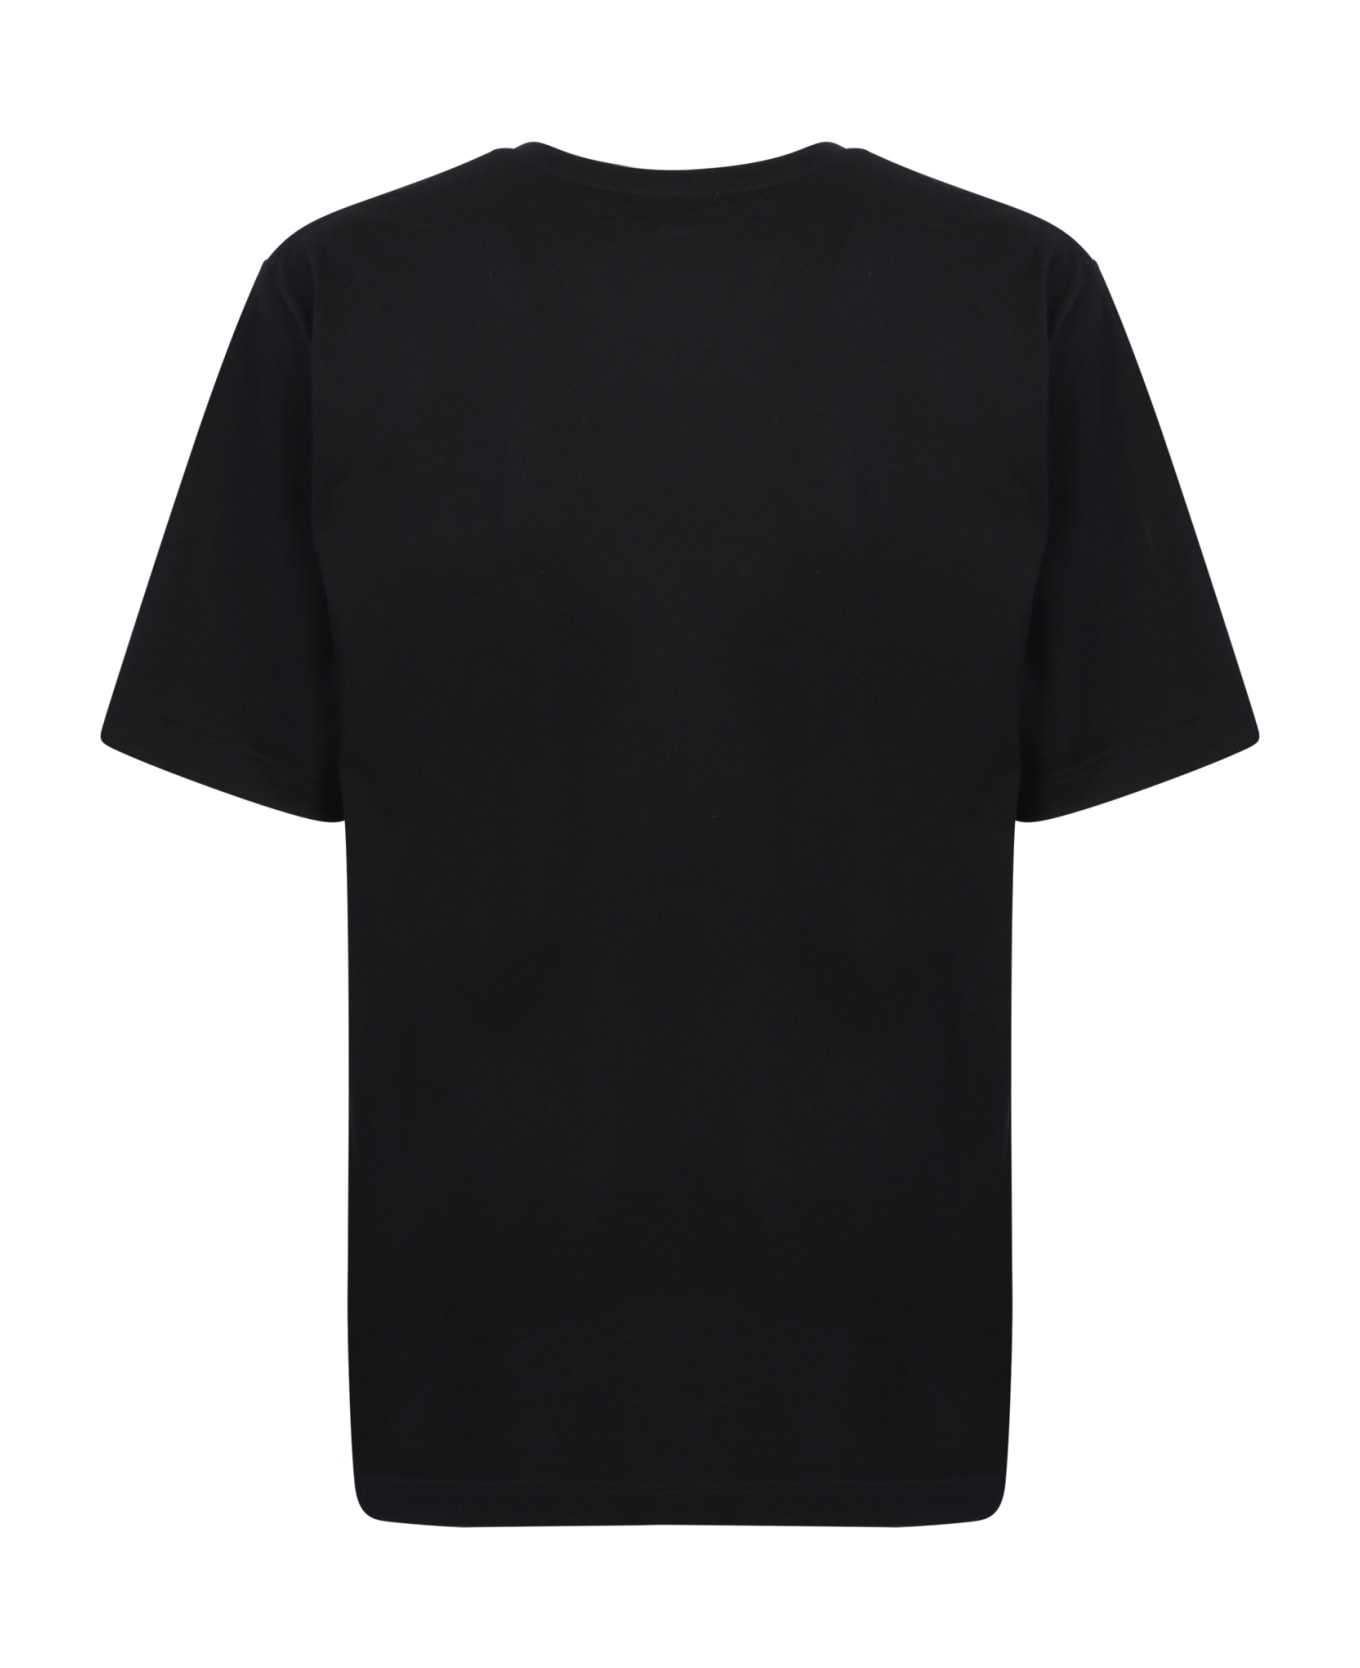 Giuseppe Zanotti Black Cotton T-shirt - Black